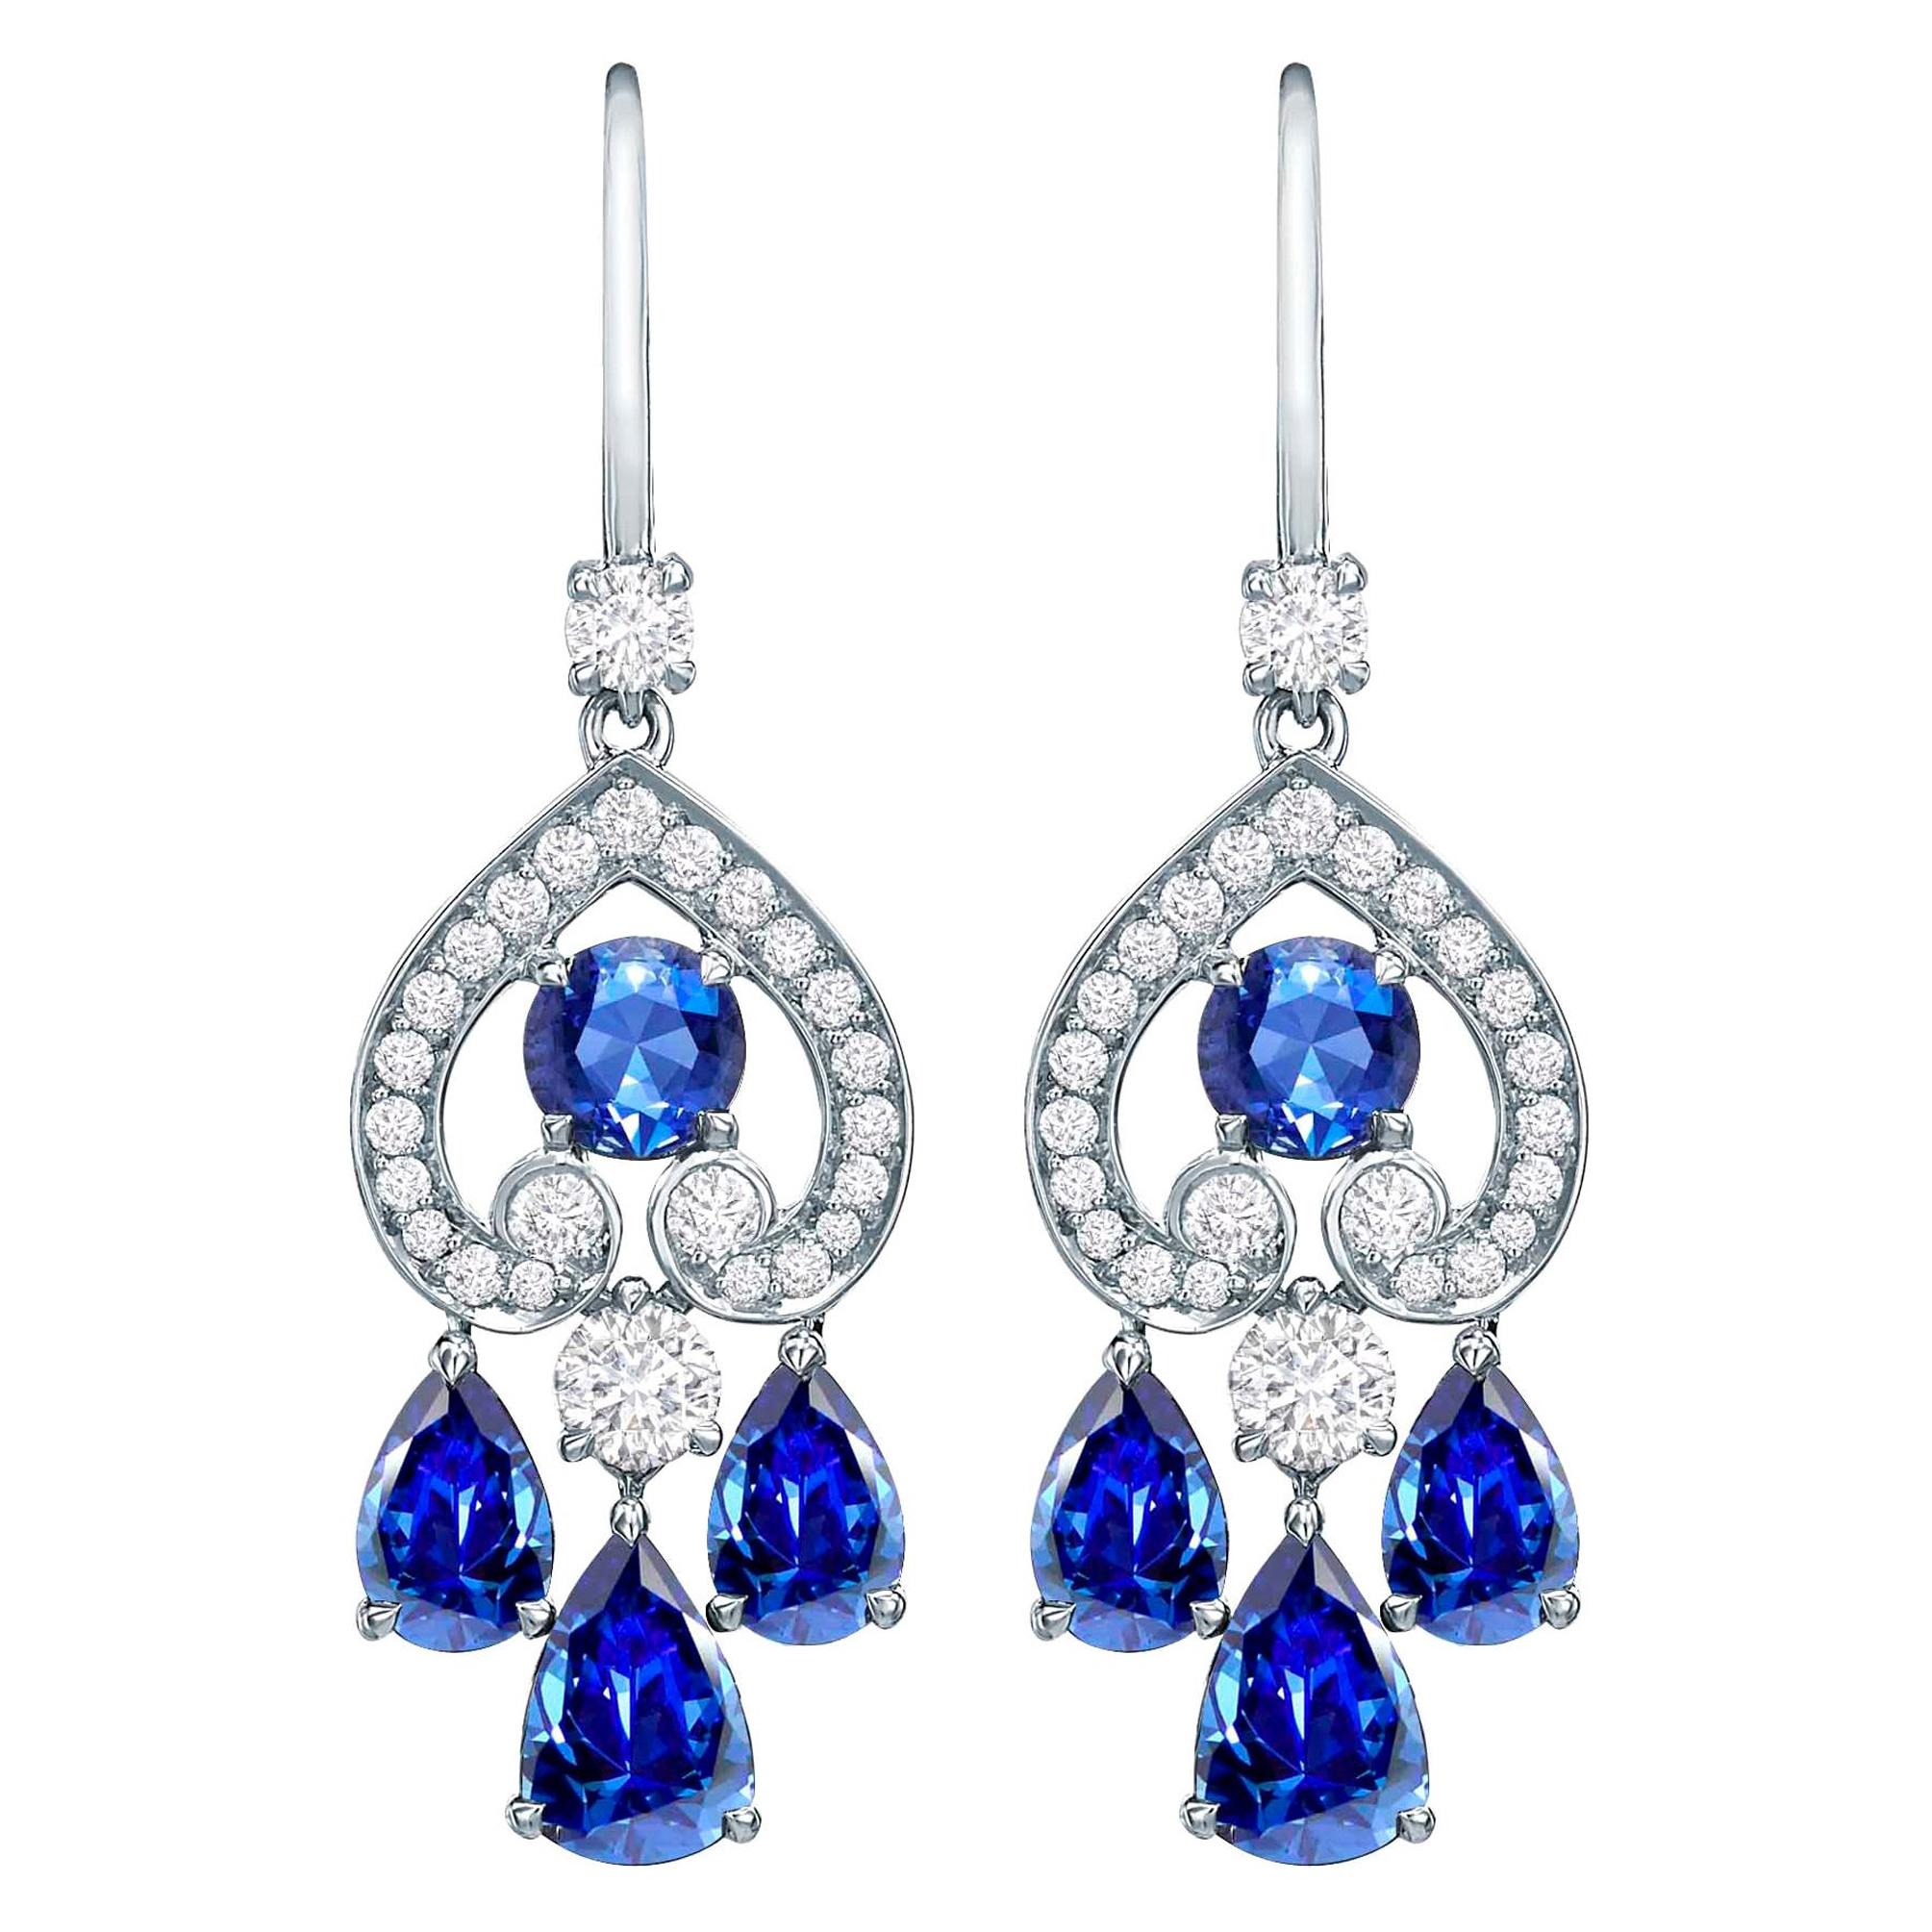 Garrard 'Regal' 18 Karat White Gold Diamond and Blue Sapphire Drop Earrings For Sale